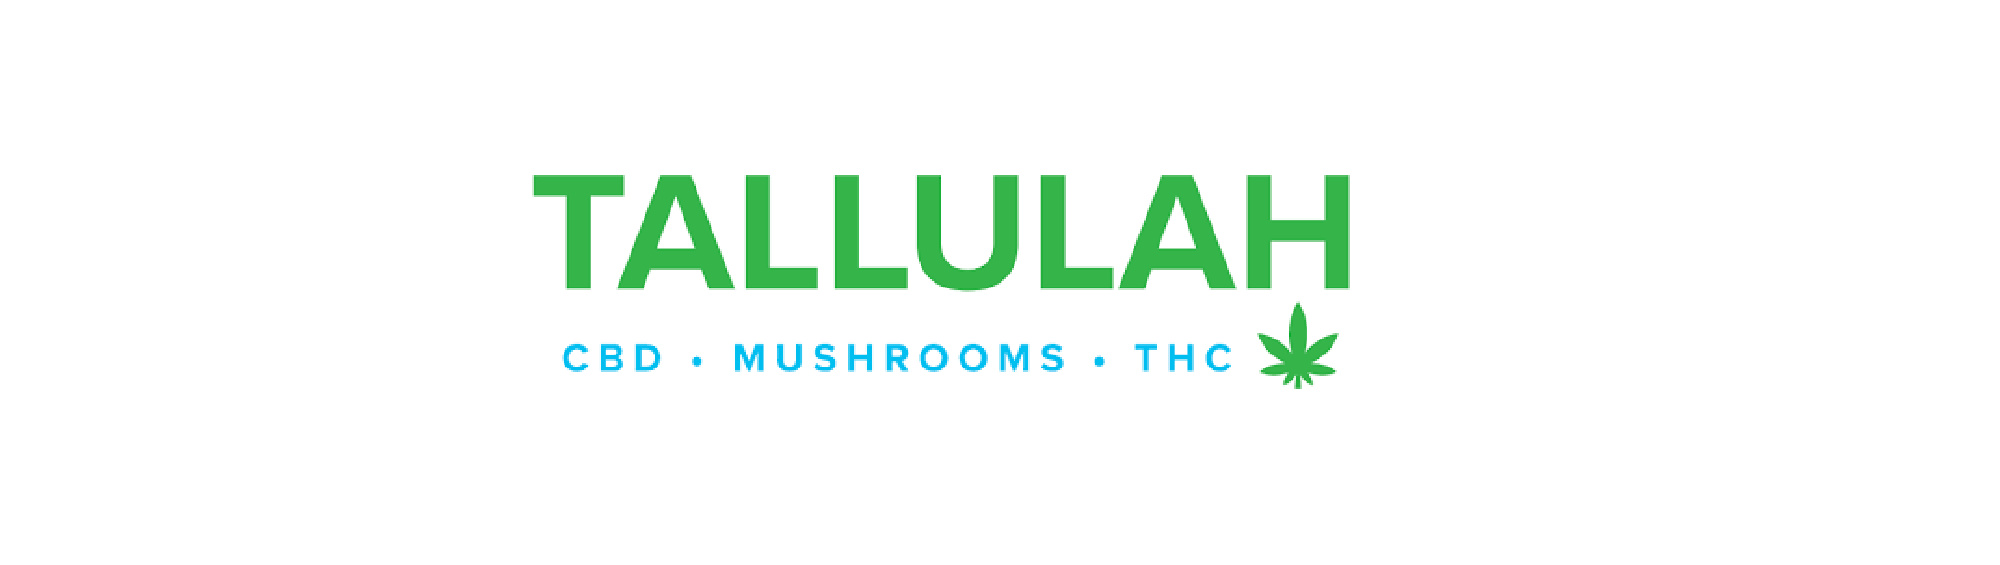 image of tallulah cbd mushrooms thc in tallahassee fl